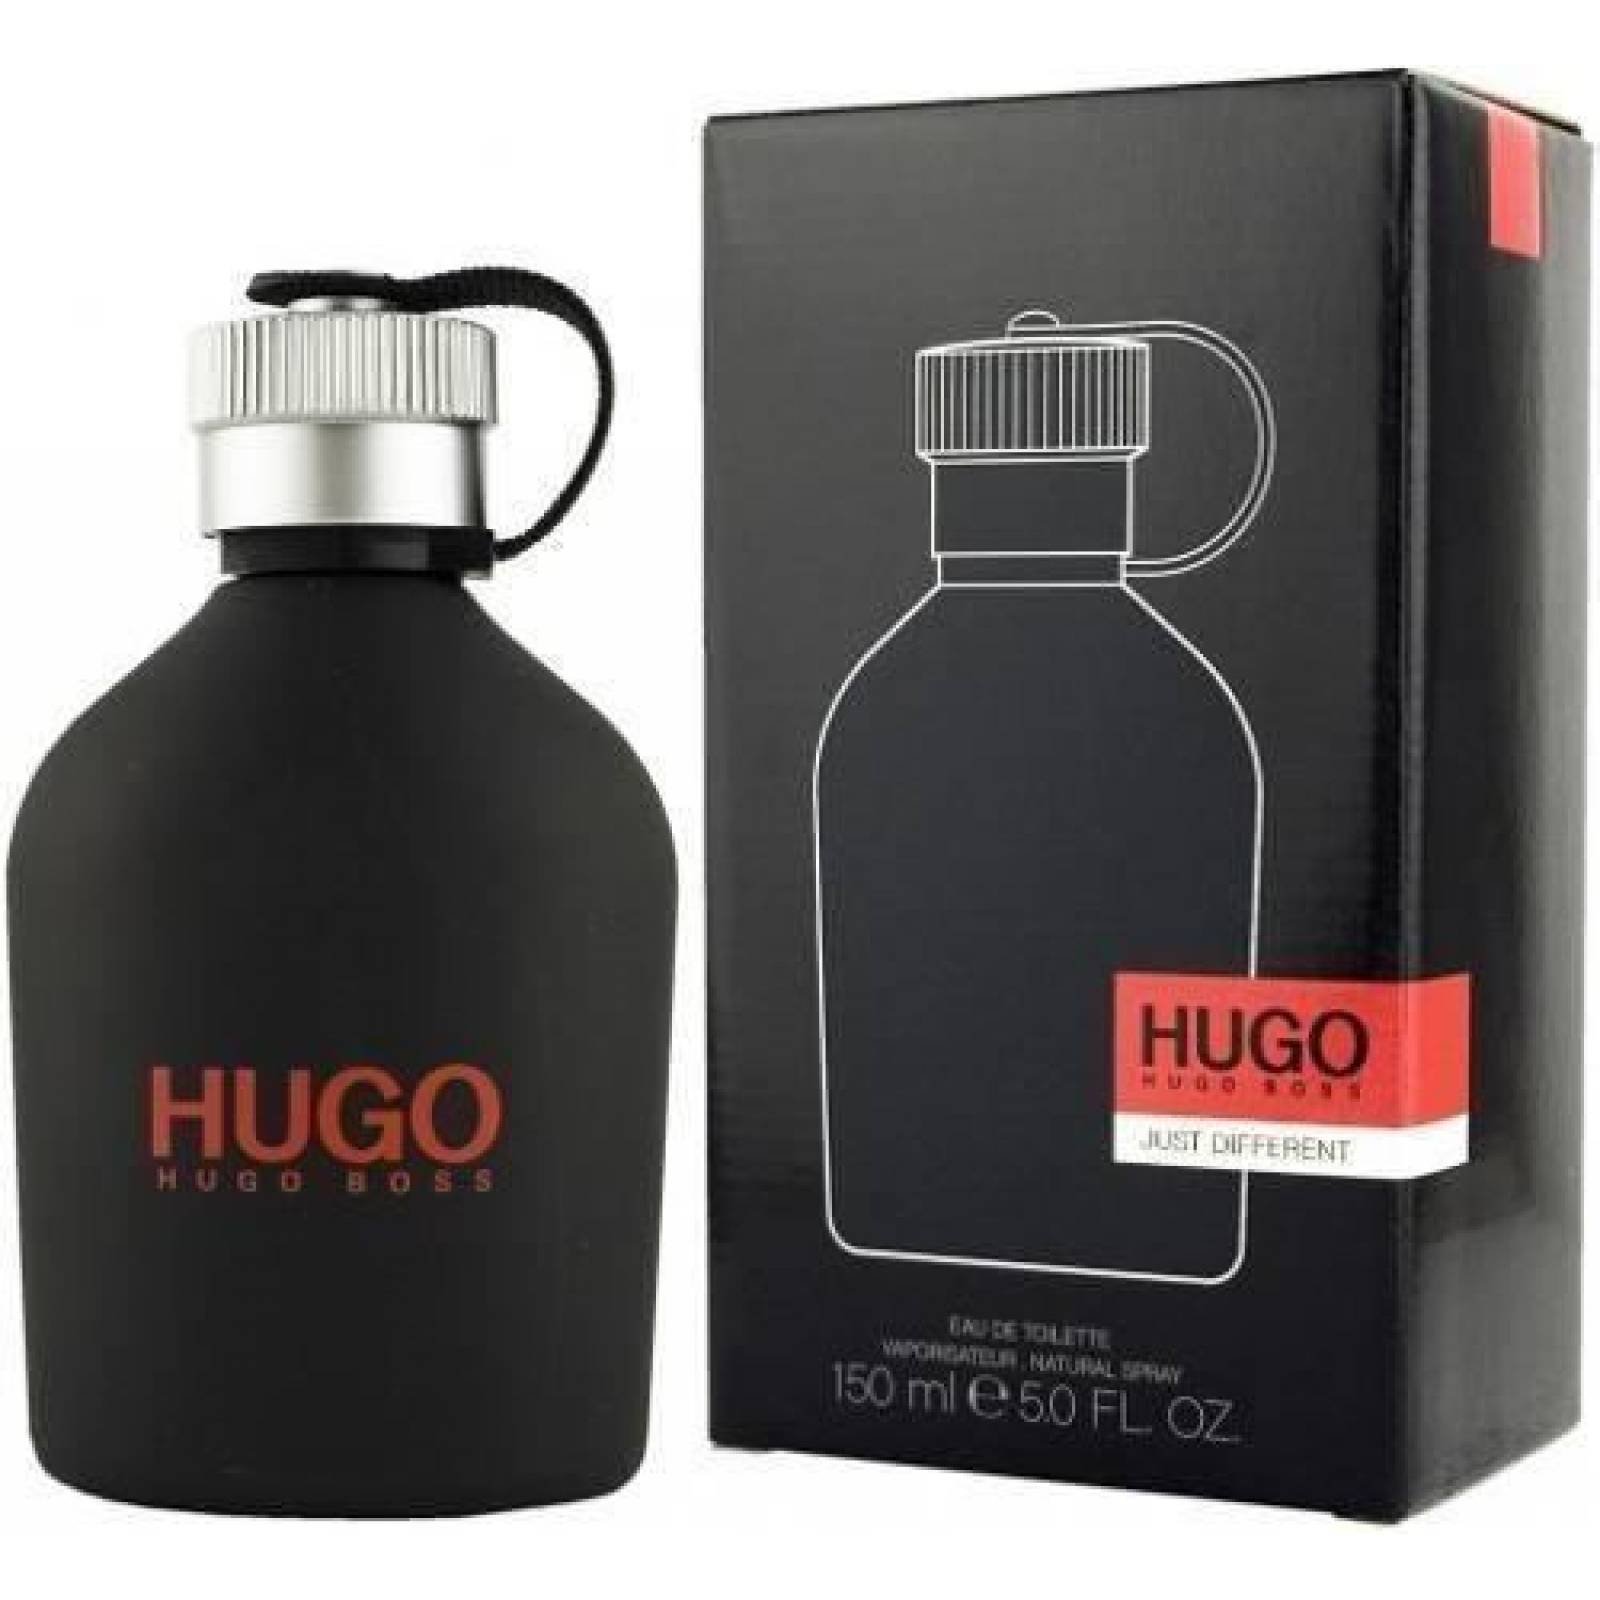 Hugo Just Diferent Caballero 125 Ml Hugo Boss Original